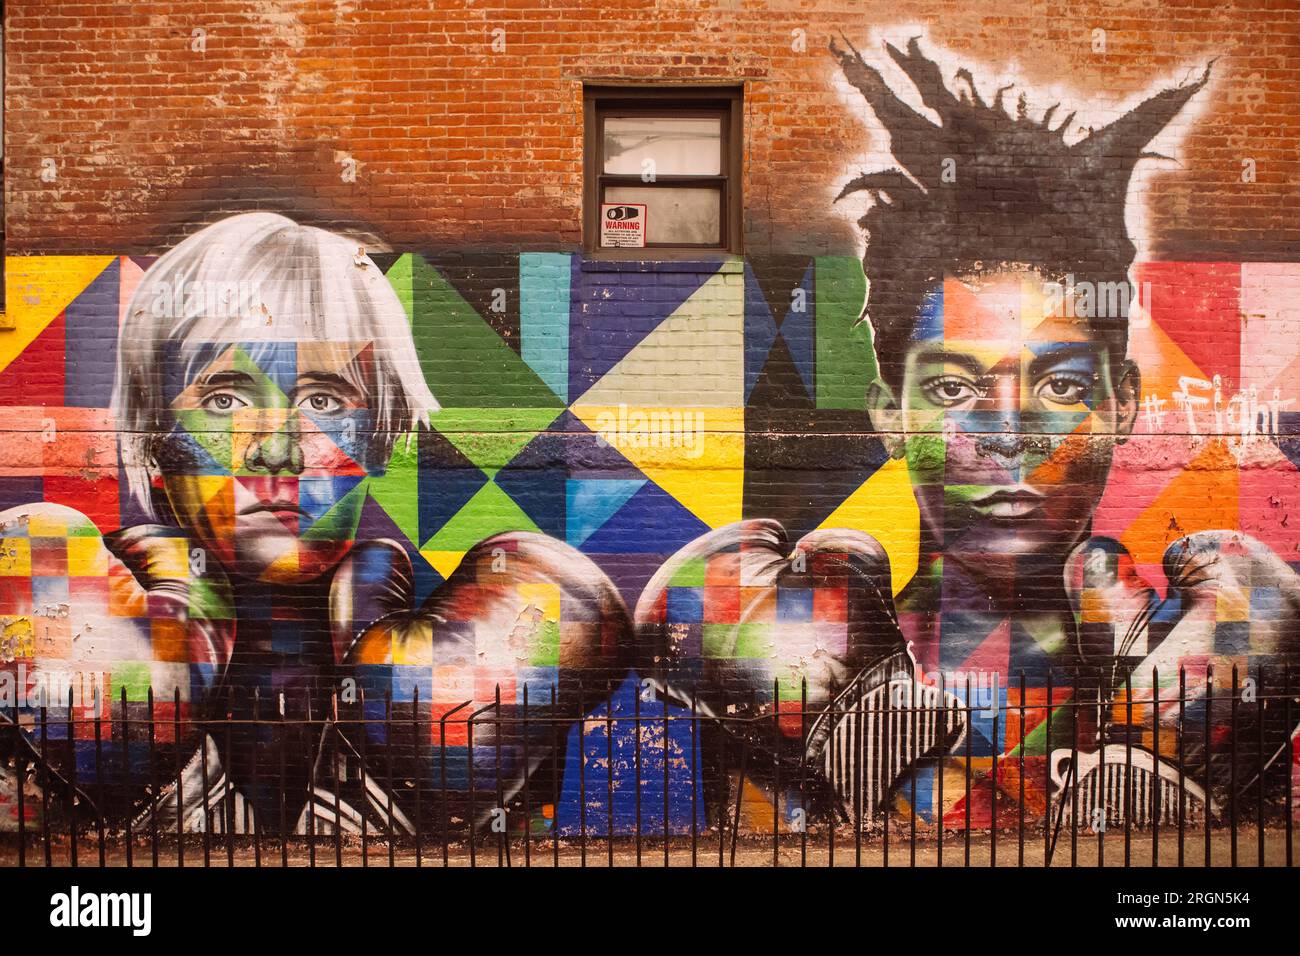 Graffiti Kobra d'Andy Warhol et Basquiat dans les murs de Williamsburg, Brooklyn, New York, USA Banque D'Images